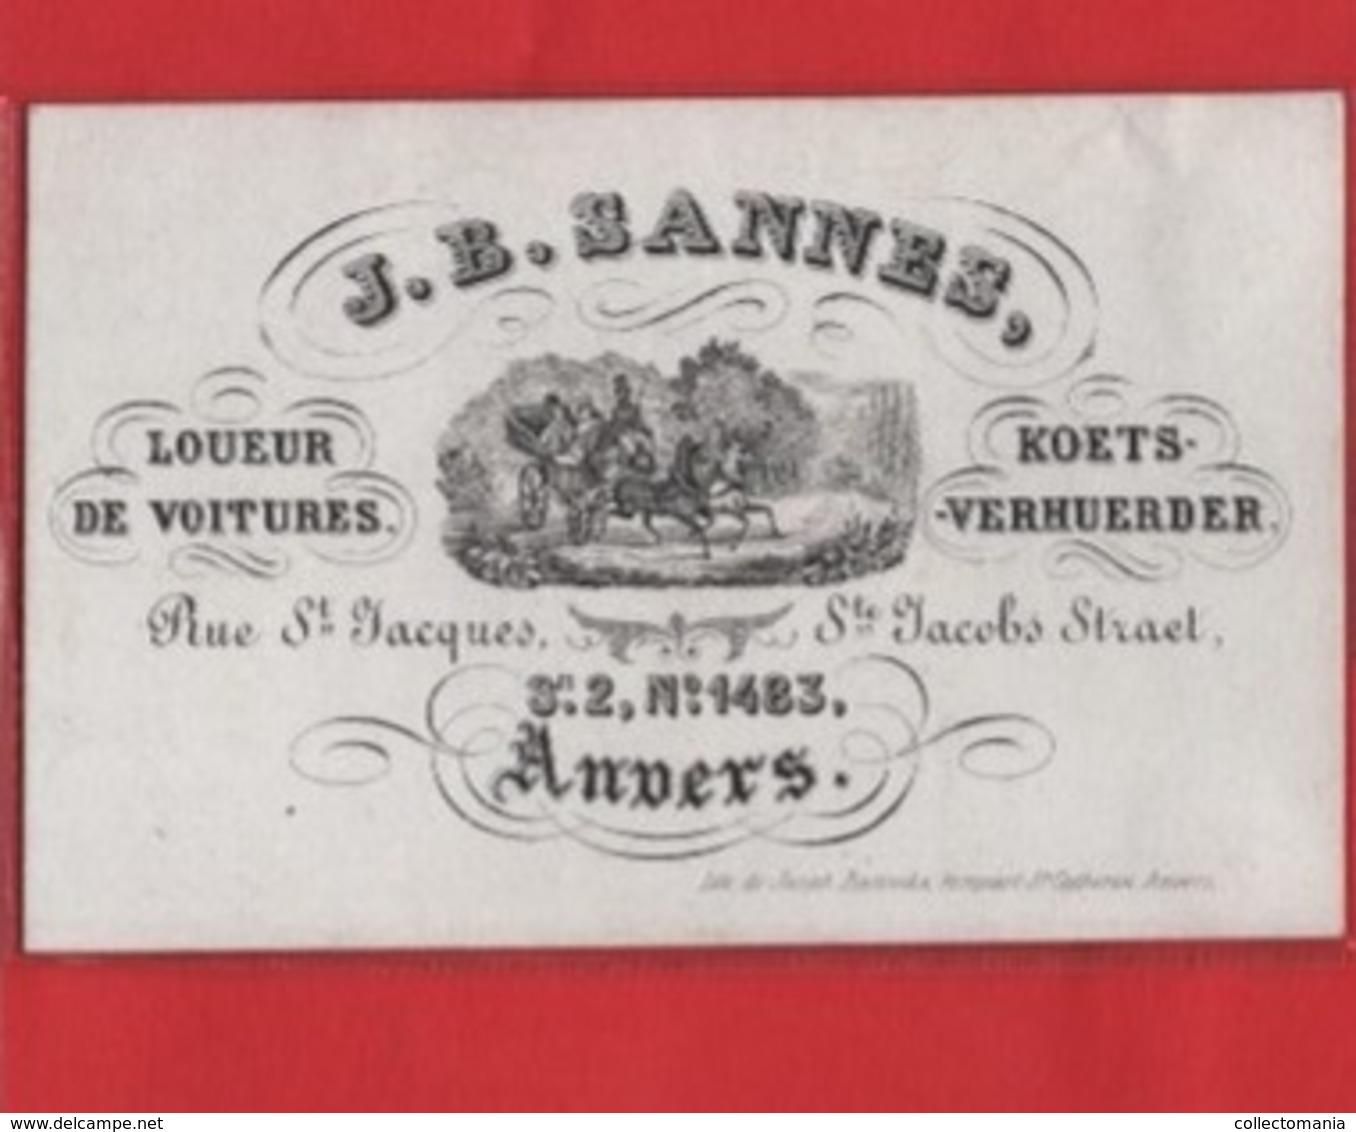 Lot85D: 6 ViSiT Cards, Printer: All  RATiNCKX In ANVERS Antwerpen Porselein Kaarten Circa 1840 à1860 Hand Press Litho - Cartes Porcelaine